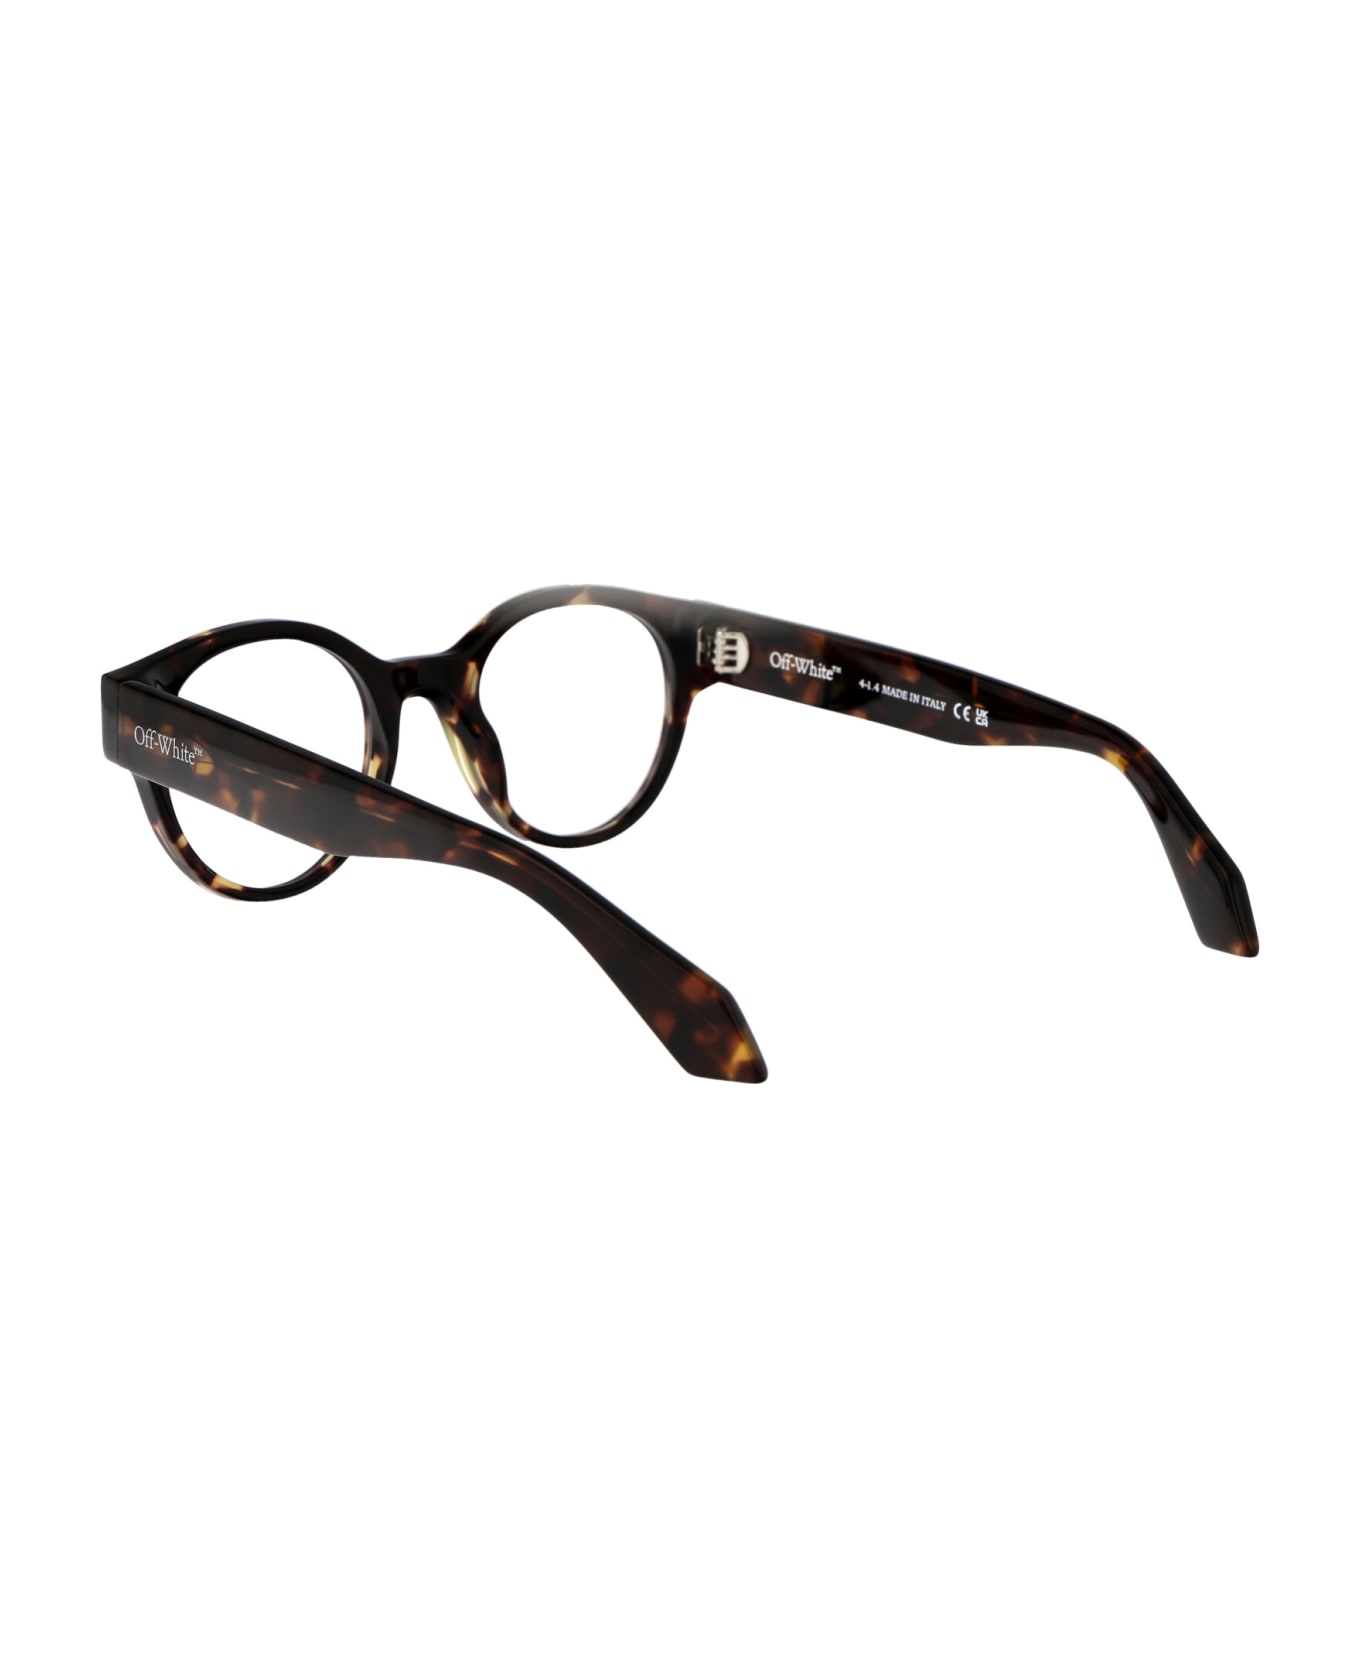 Off-White Optical Style 55 Glasses - 6000 HAVANA